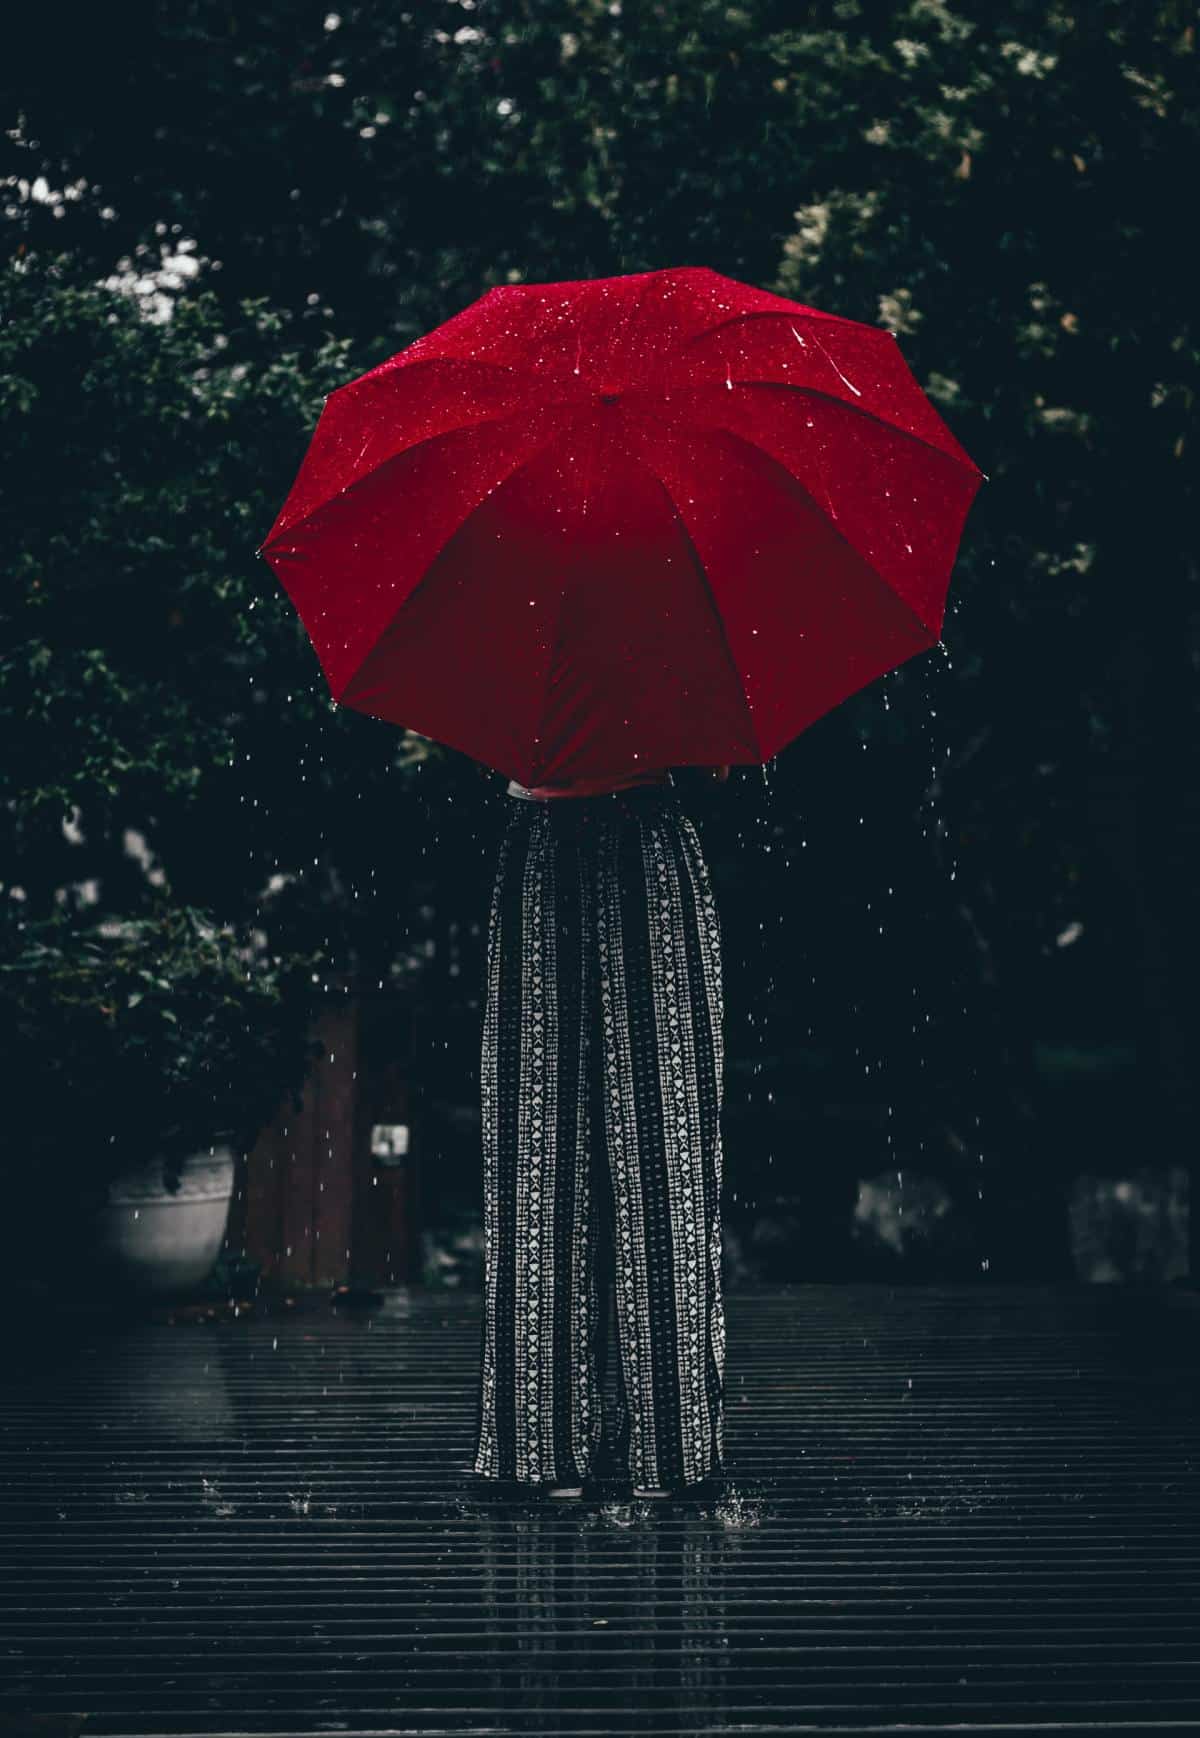 in the rain with red umbrella